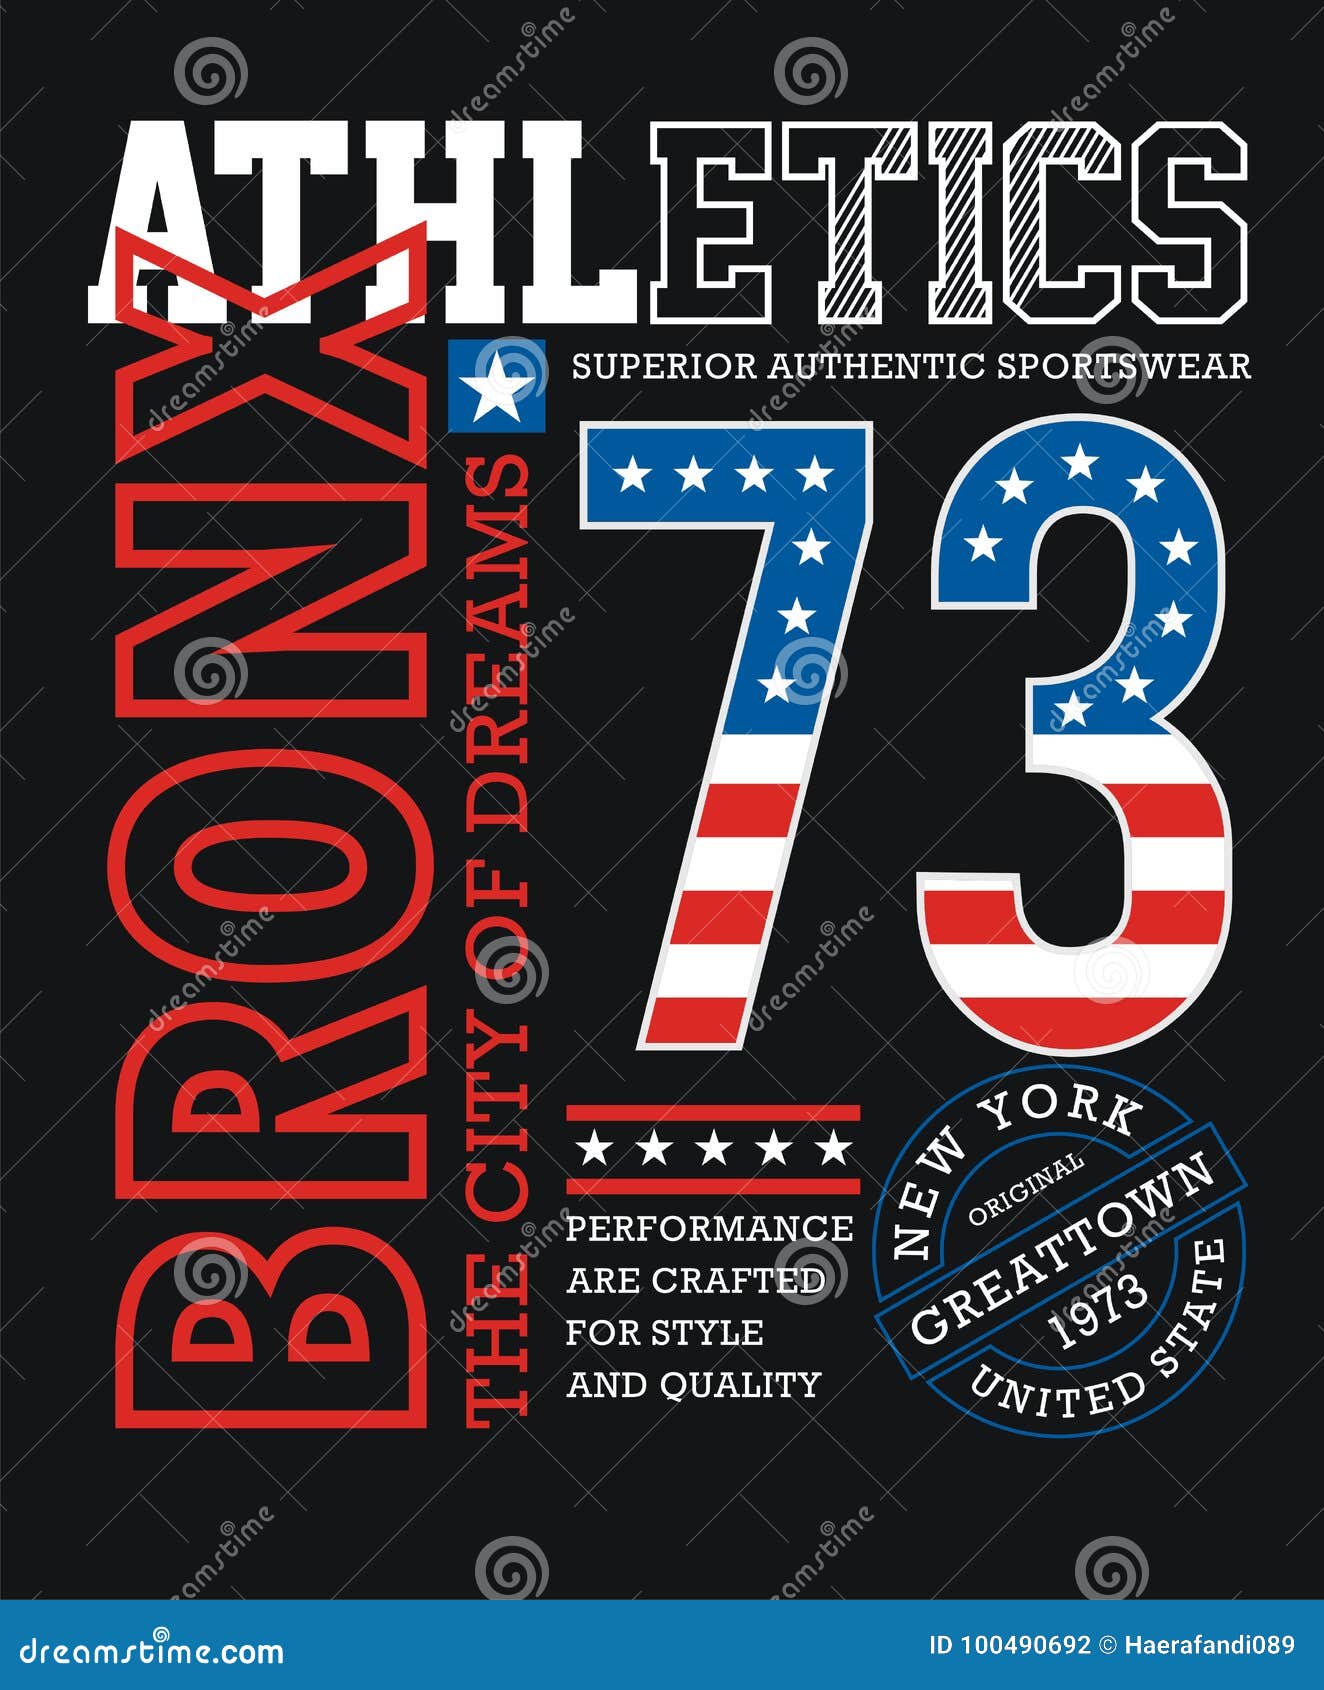 Athletics T-Shirt Design Graphic by BTeedesign · Creative Fabrica